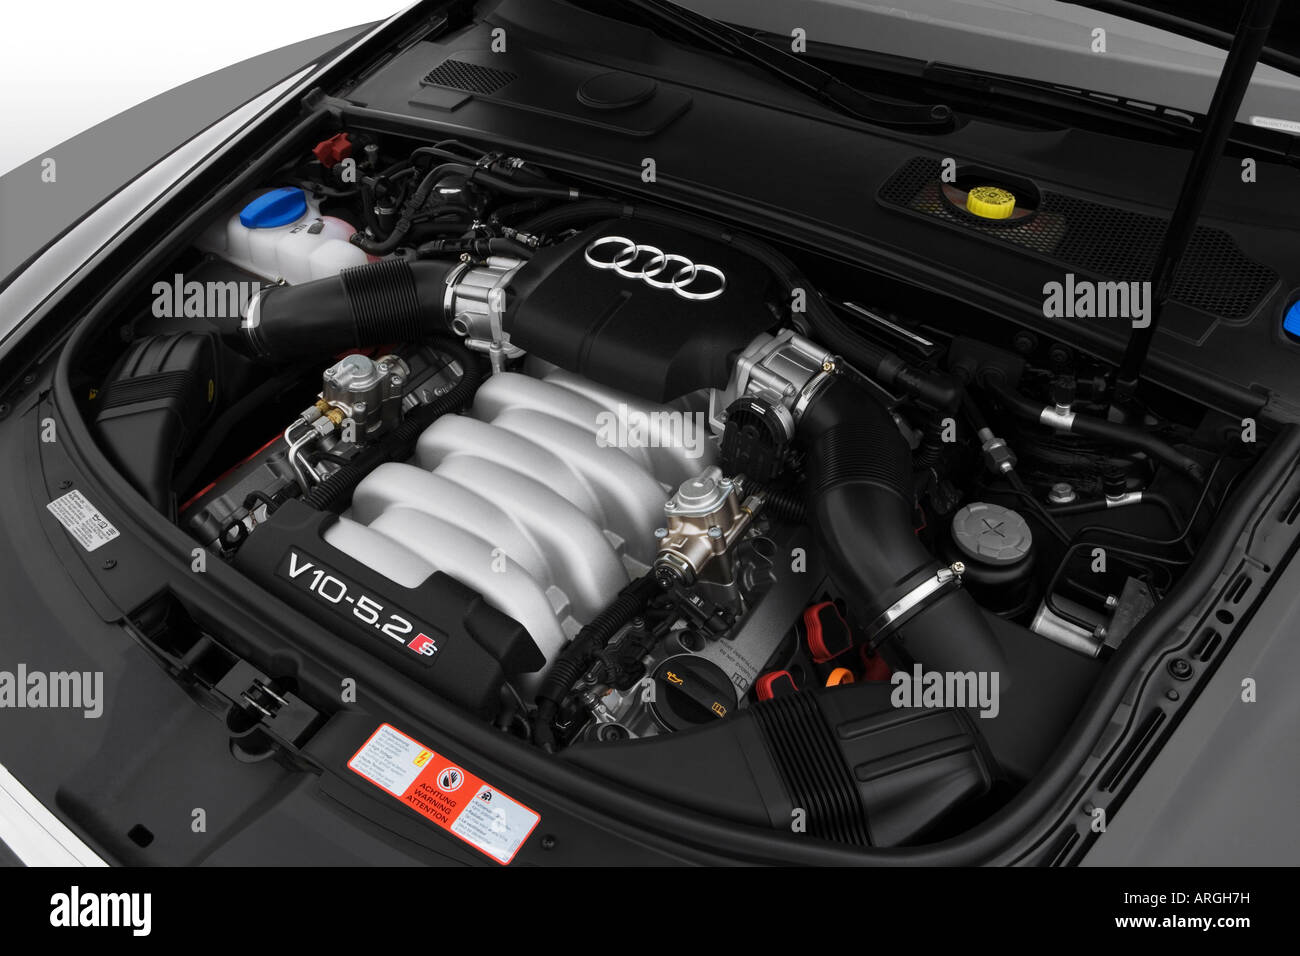 2007 Audi S6 in Black - Engine Stock Photo - Alamy